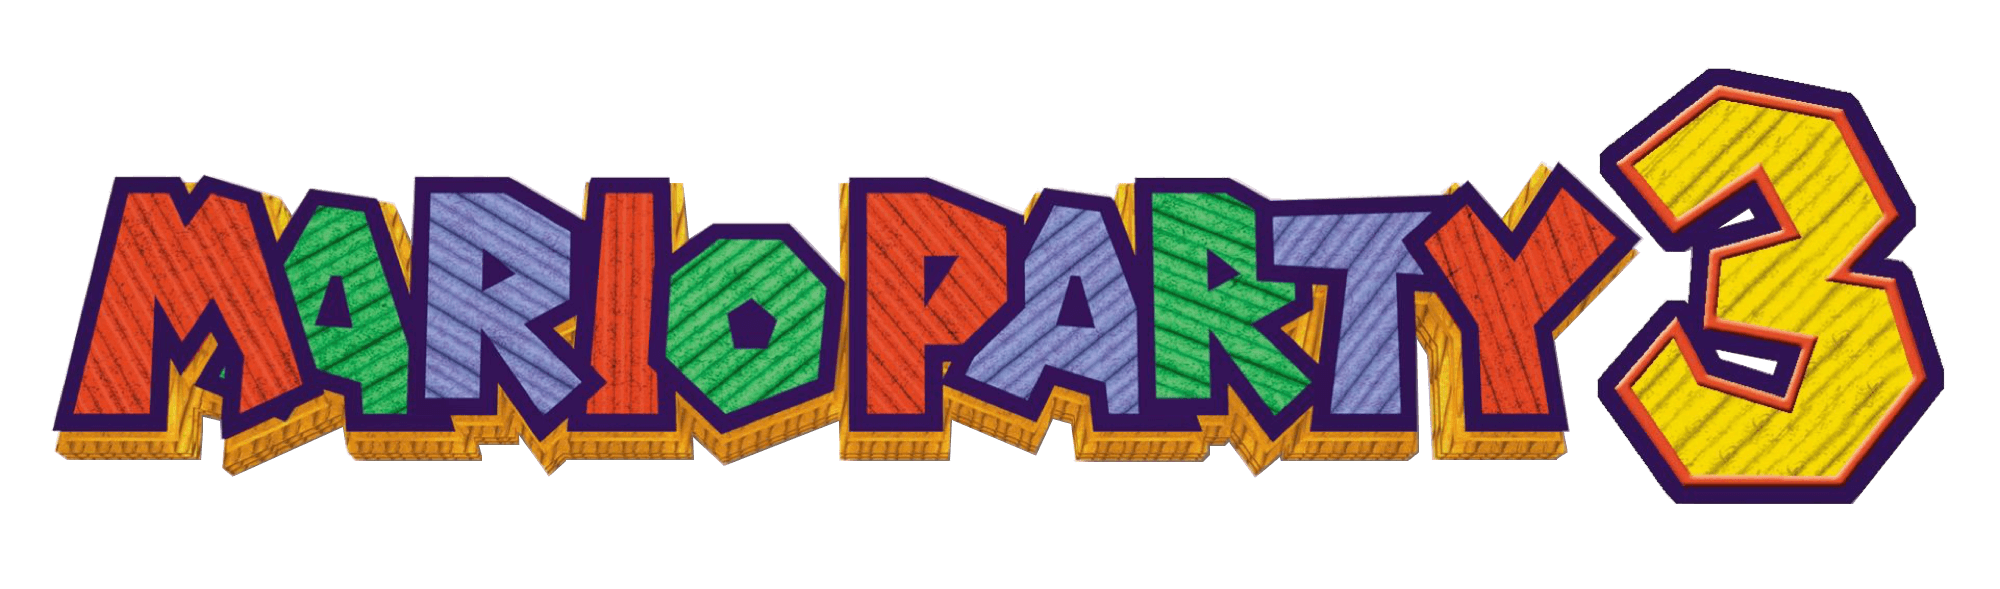 Mario Party 2 Logo - Mario Party (game series) | Logopedia | FANDOM powered by Wikia